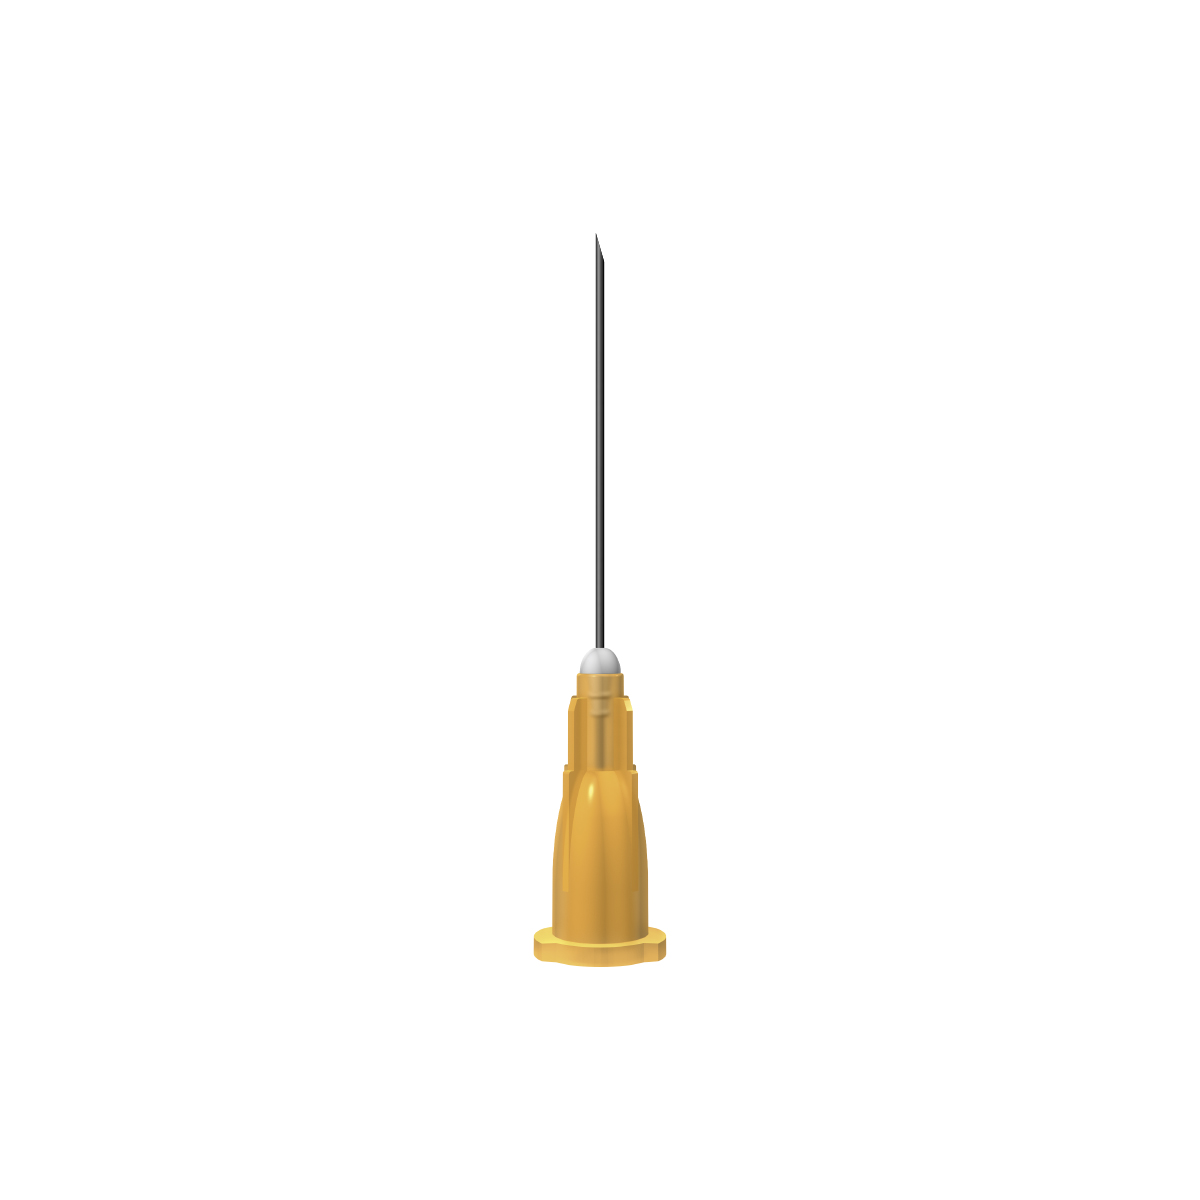 Unisharp: Orange 25G 25mm (1 inch) needle